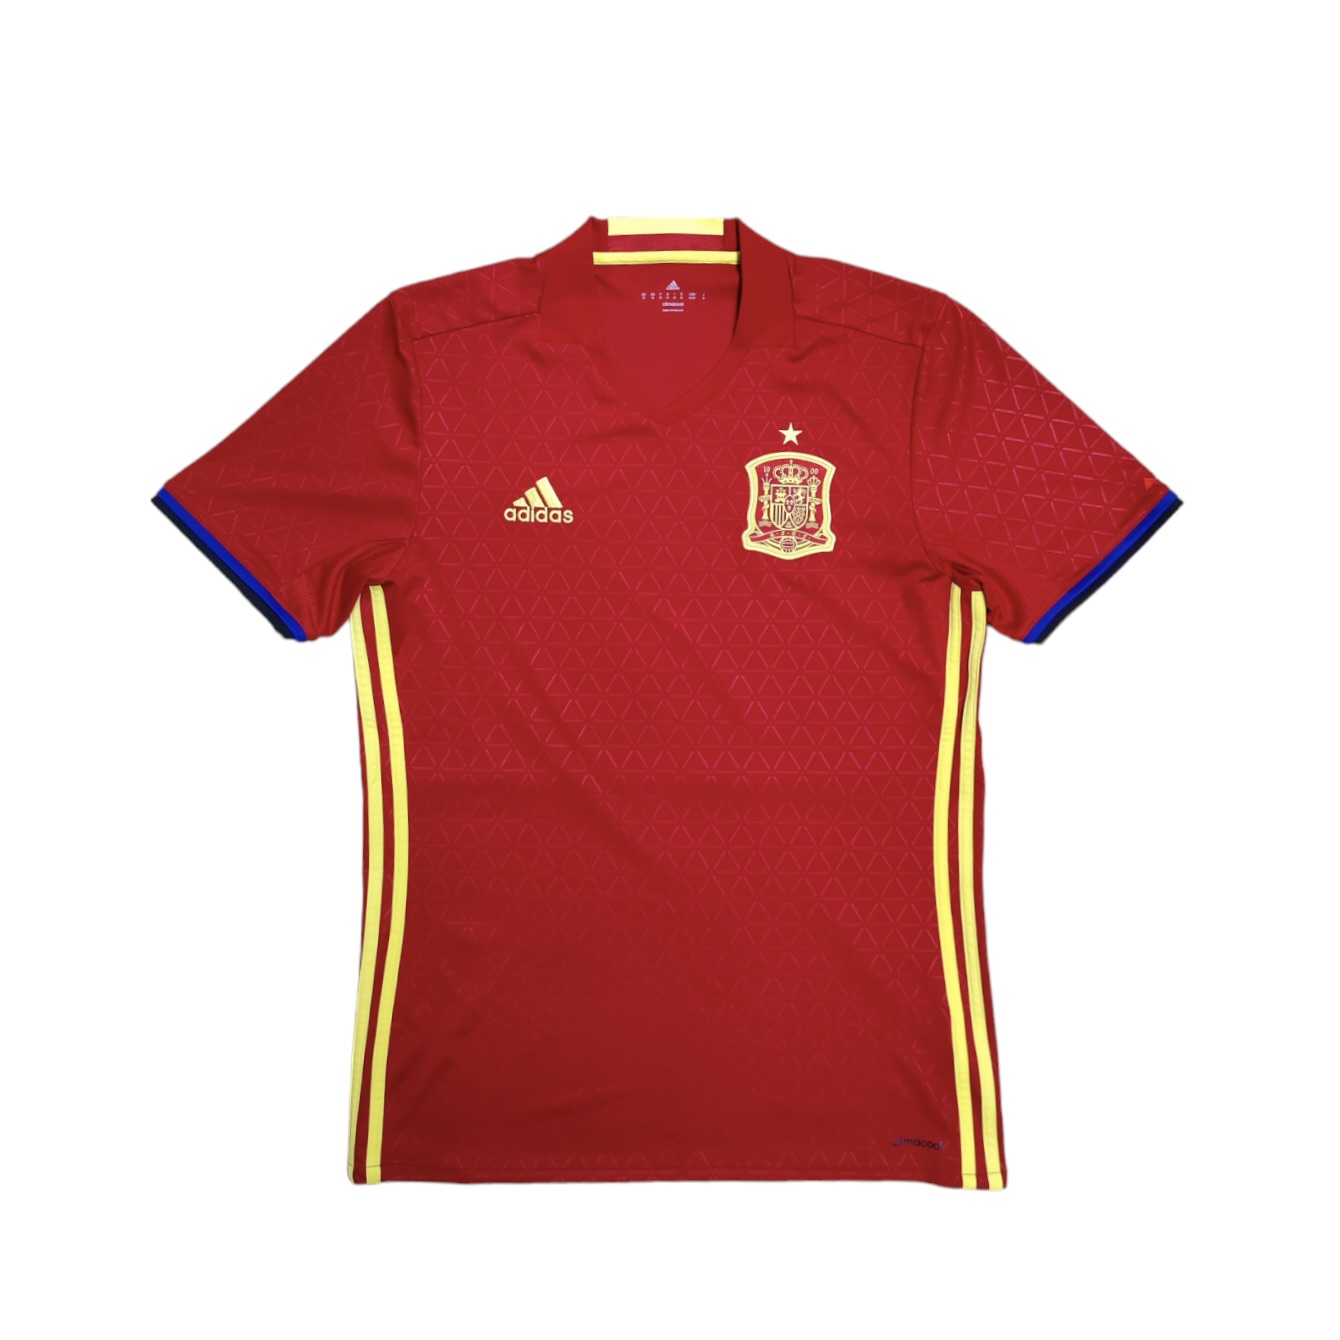 Adidas Spain 2016 Football Jersey